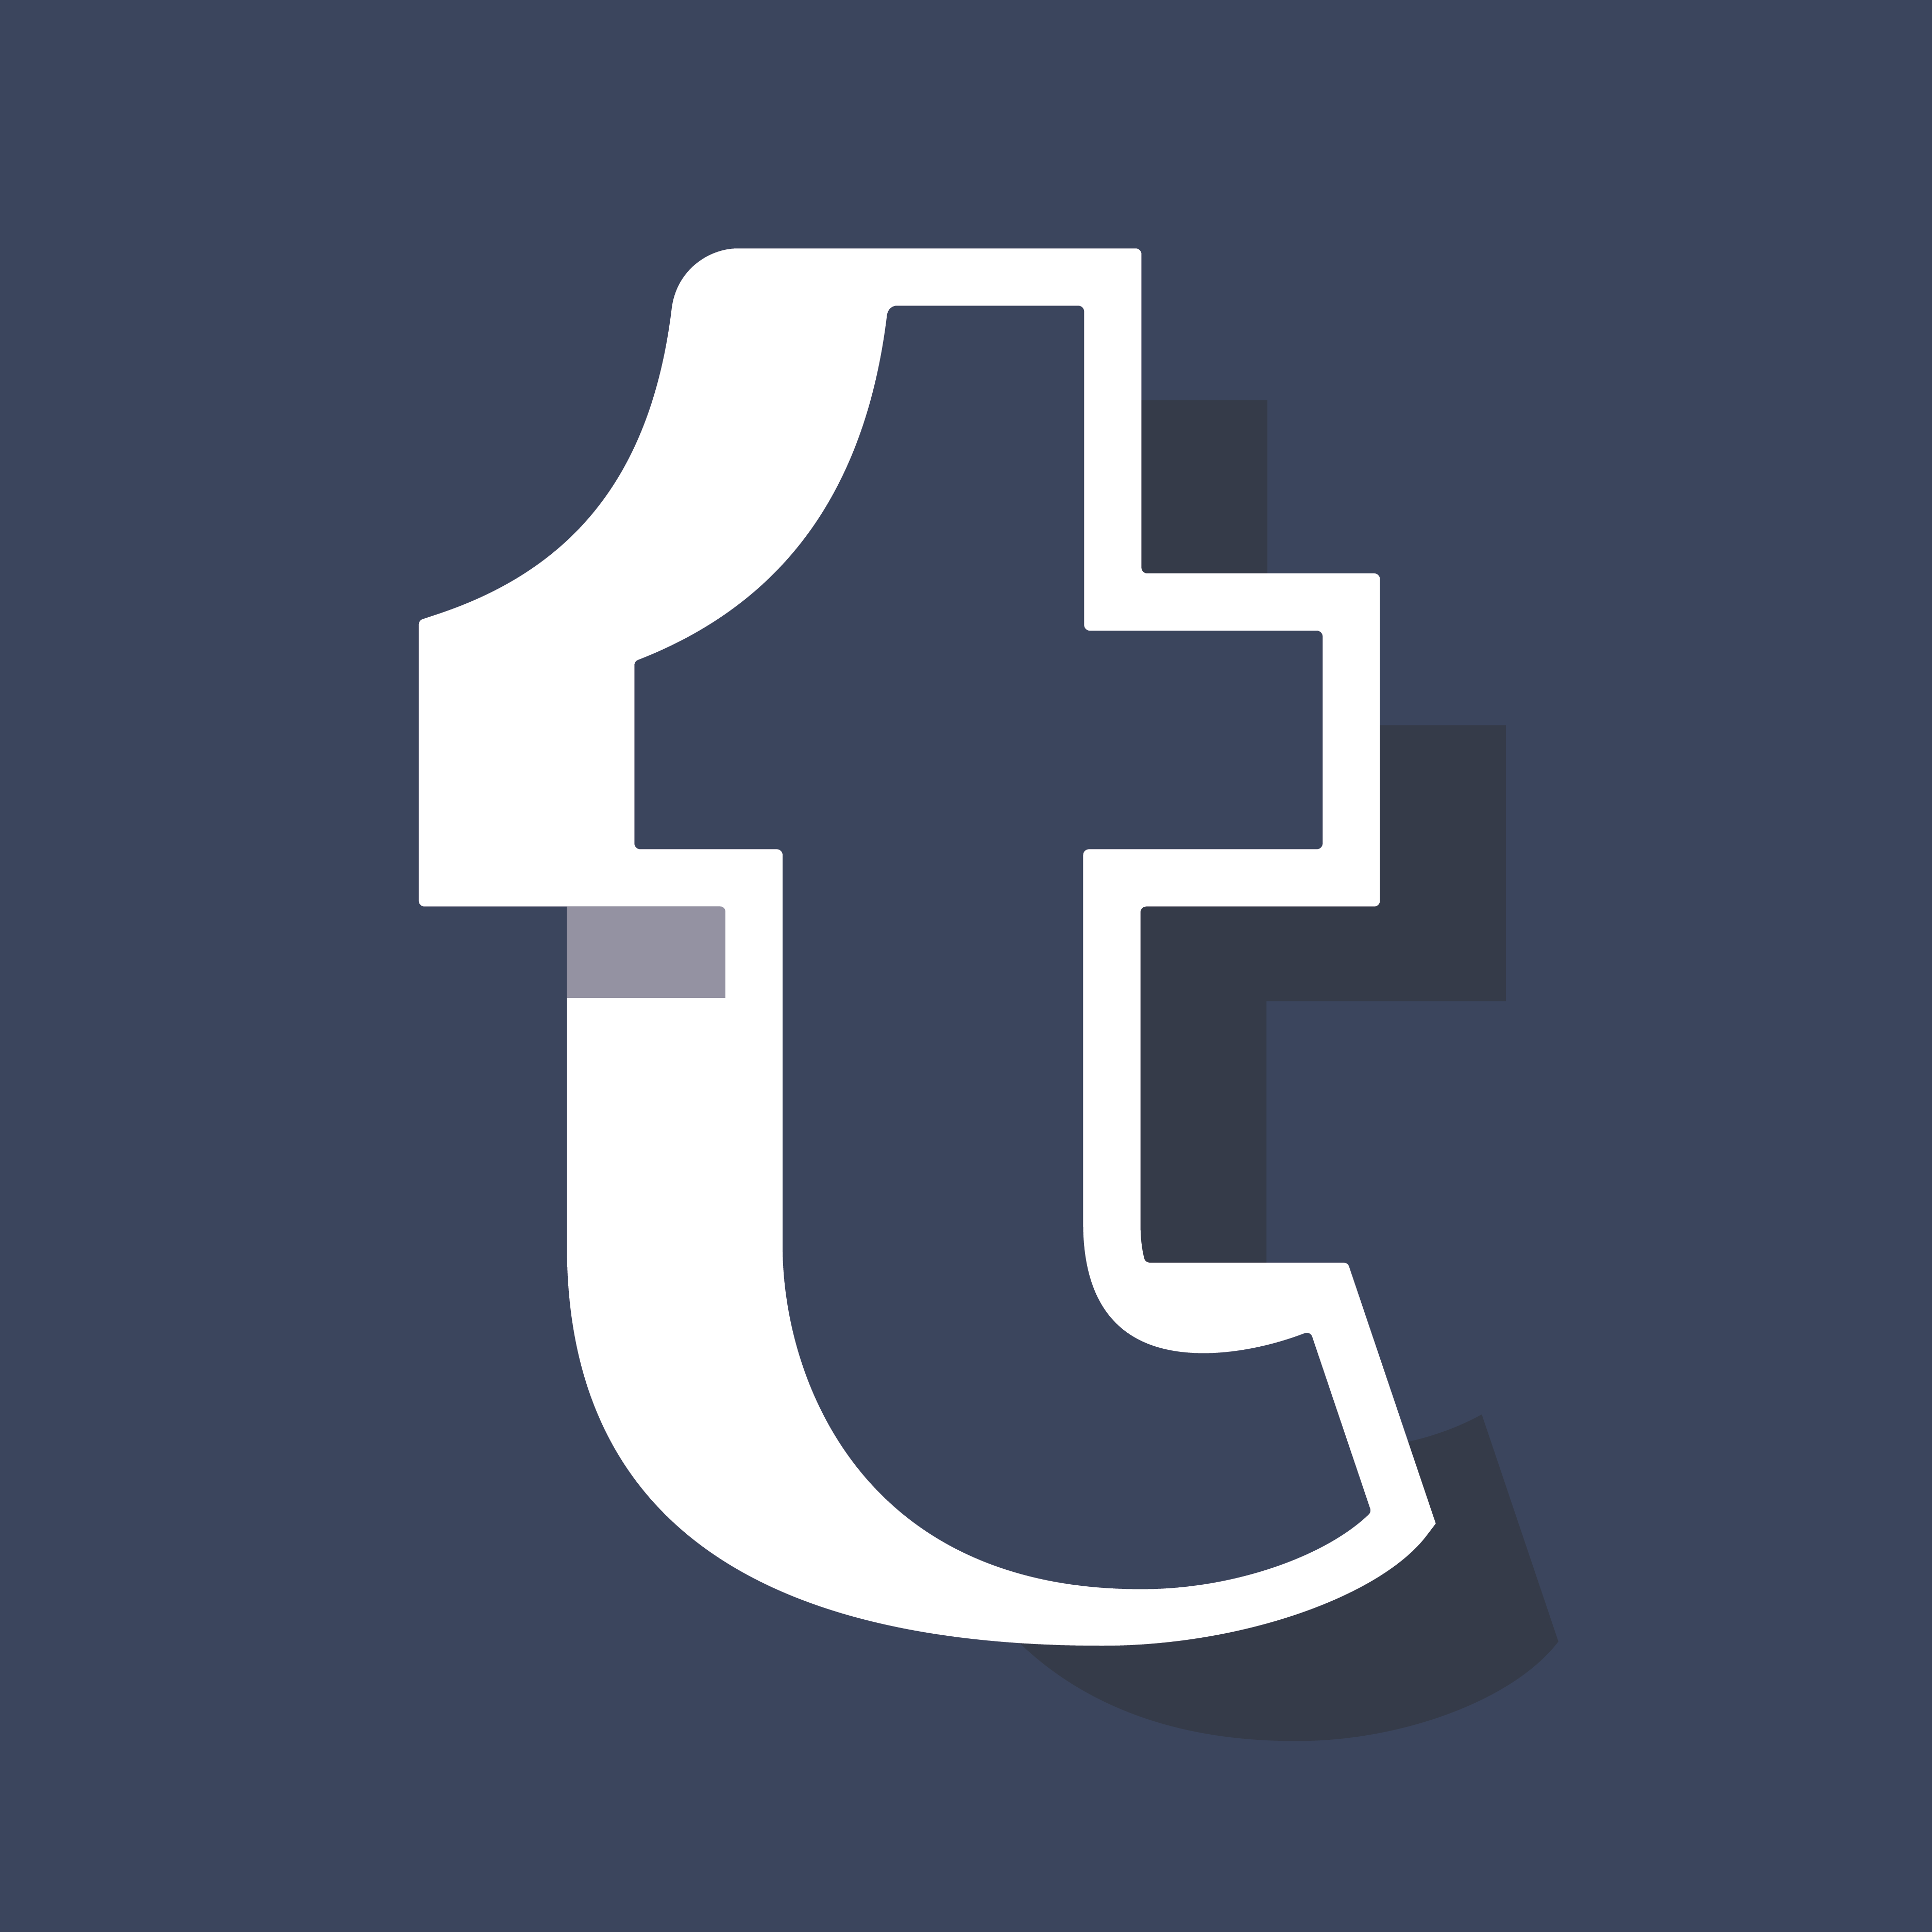 tumblr logo 2